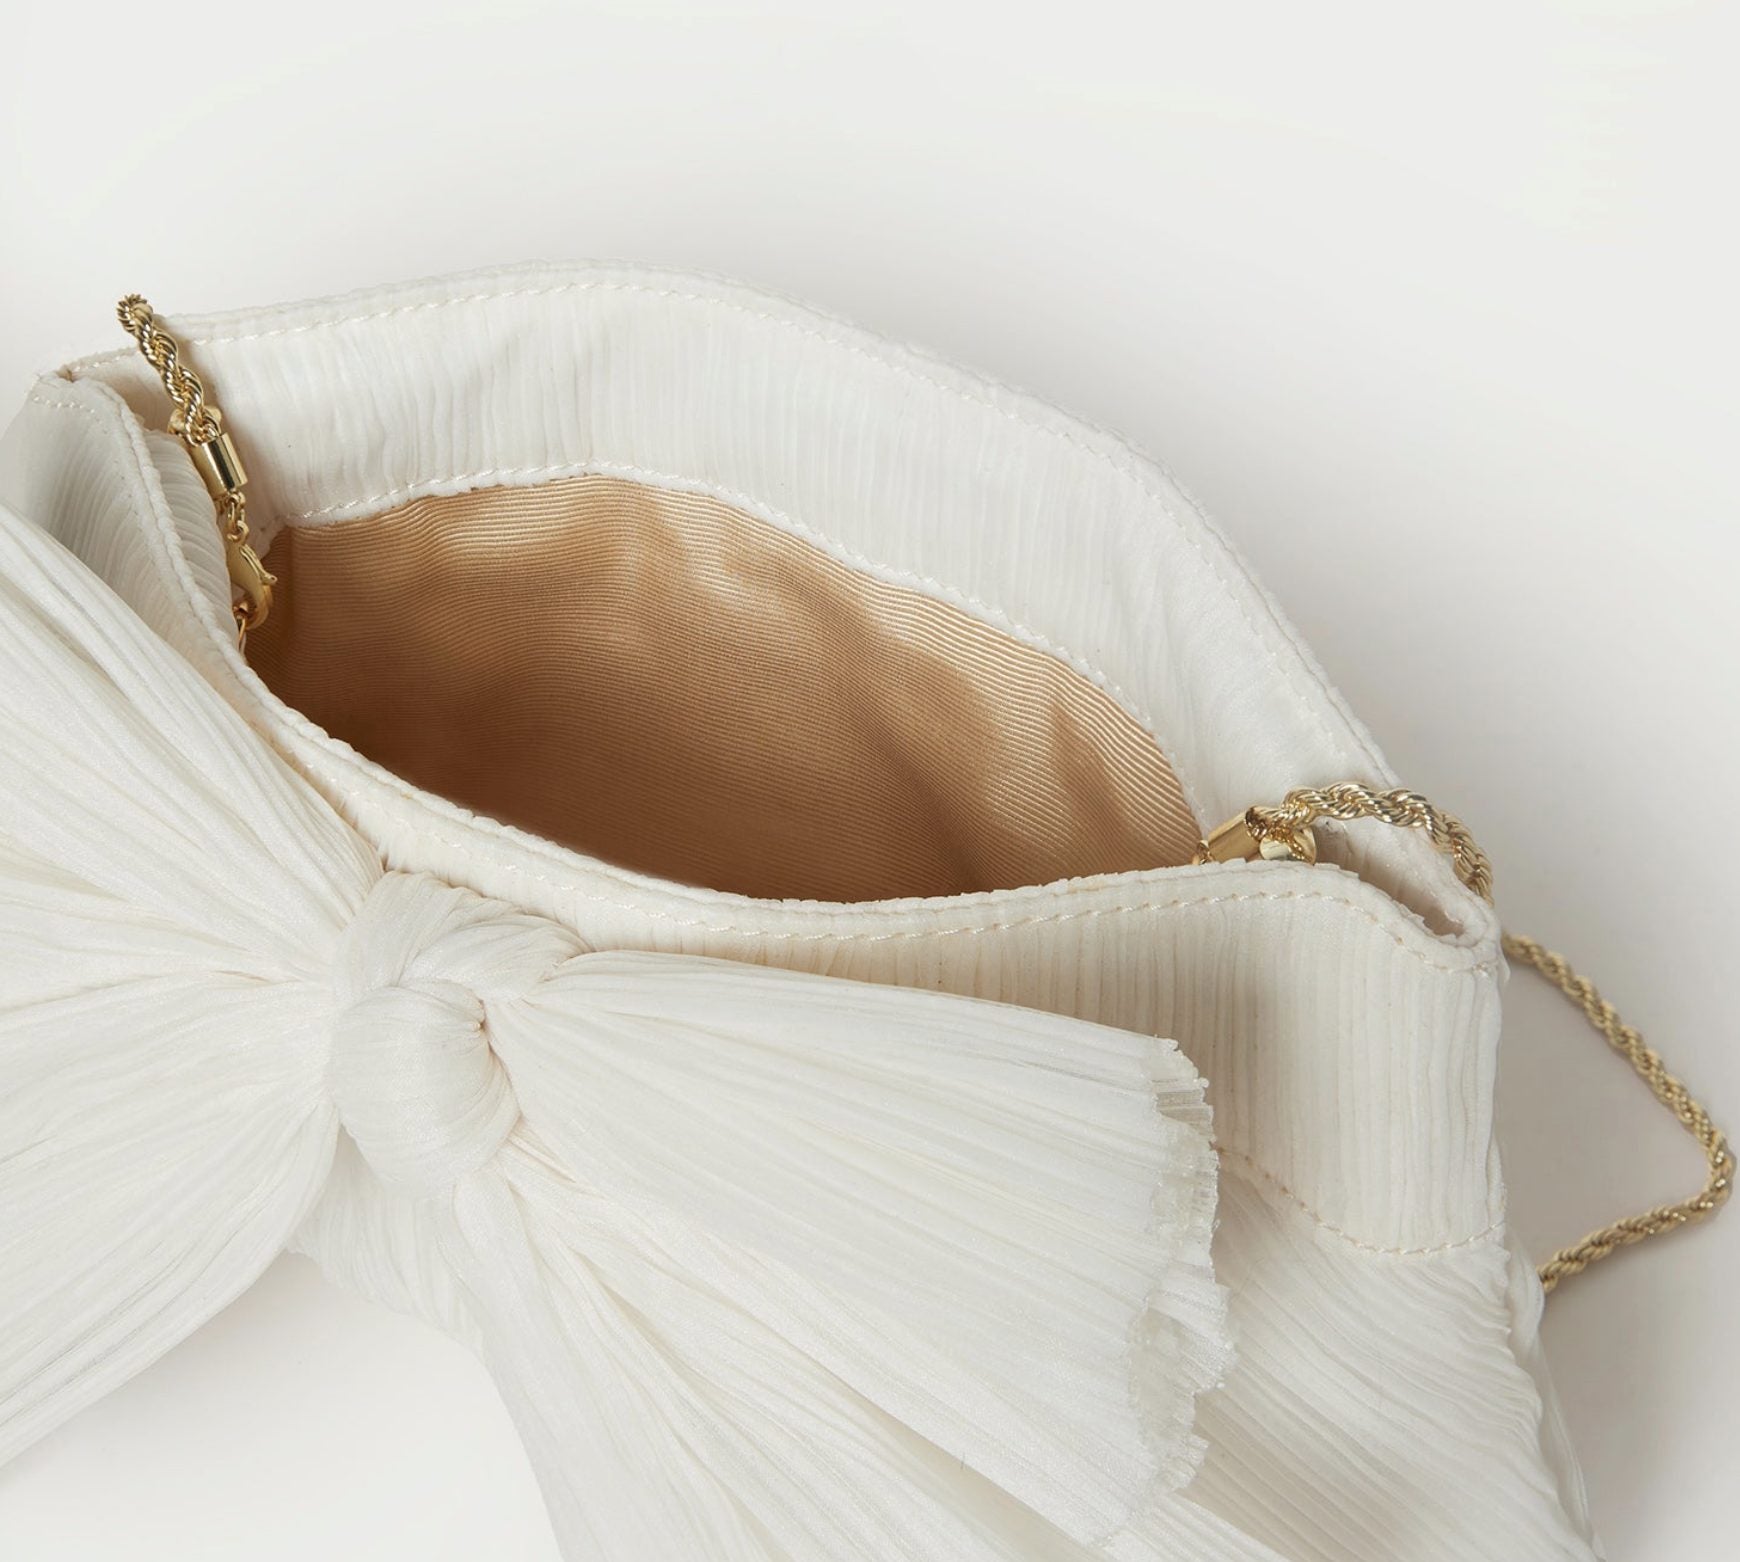 Pearl Rayne Clutch Handbag by Loeffler Randall